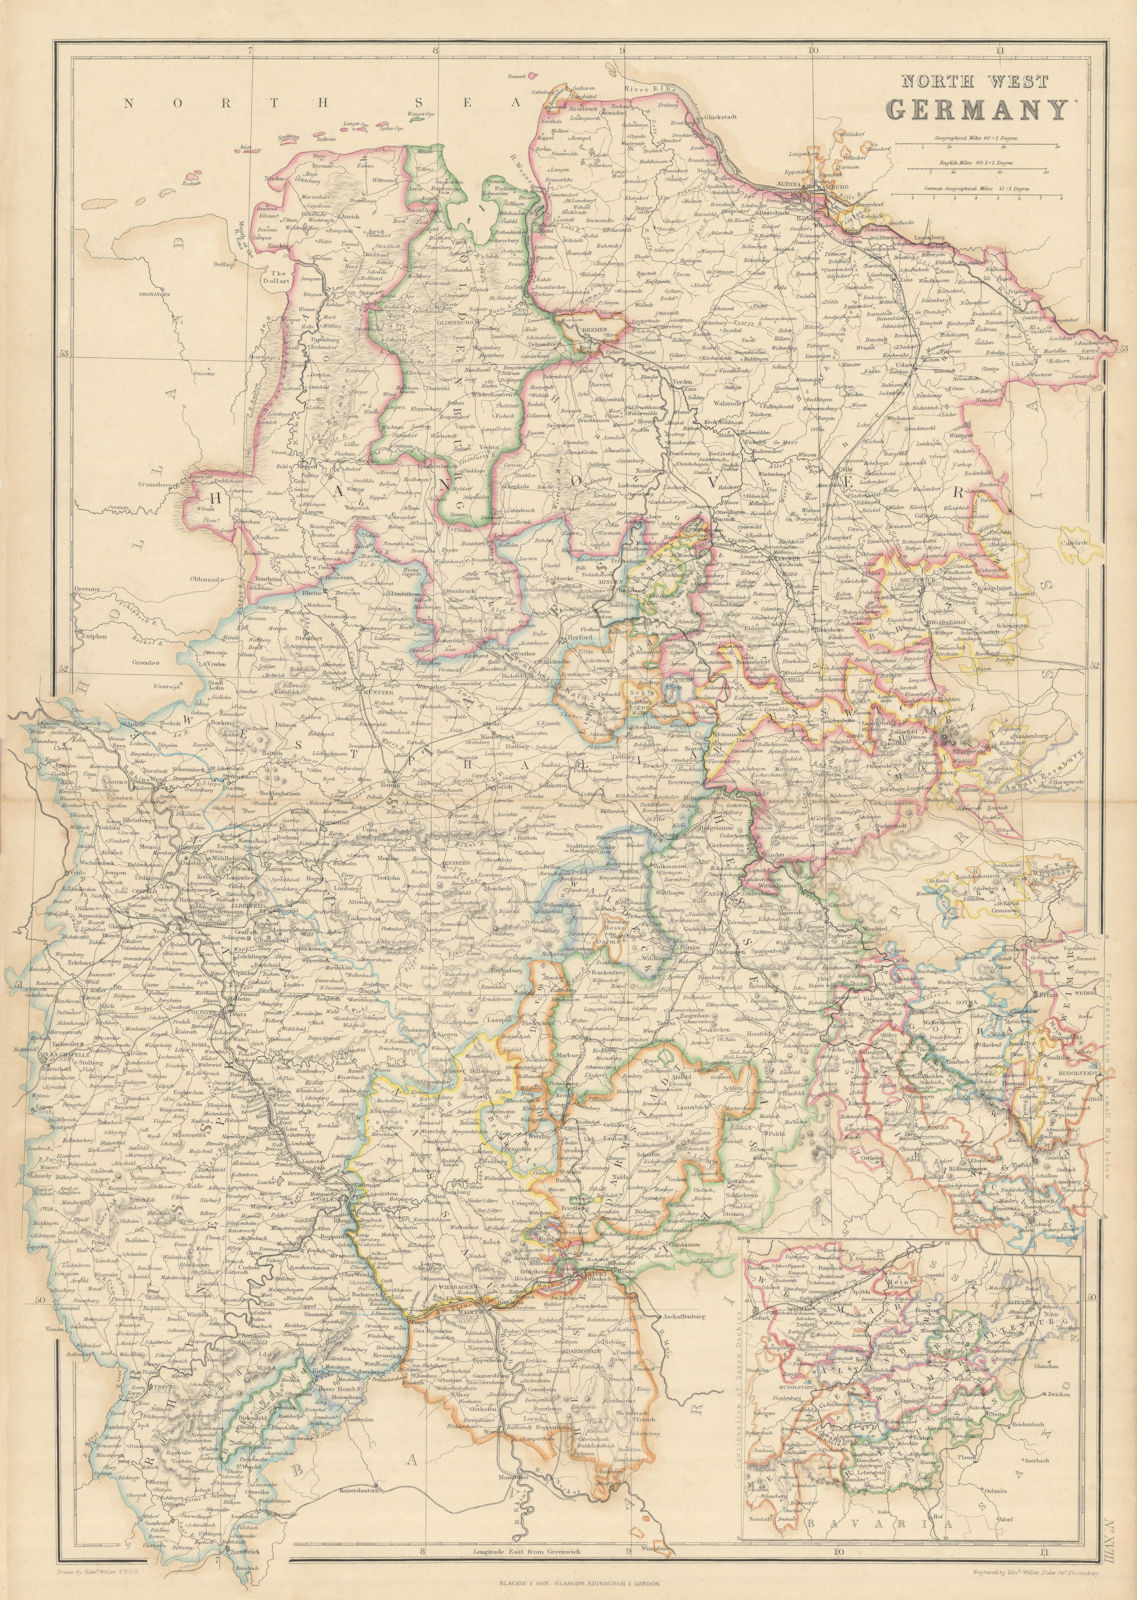 Associate Product North-West Germany. Hanover, Rhenish Prussia, Nassau, Hesse. WELLER 1860 map